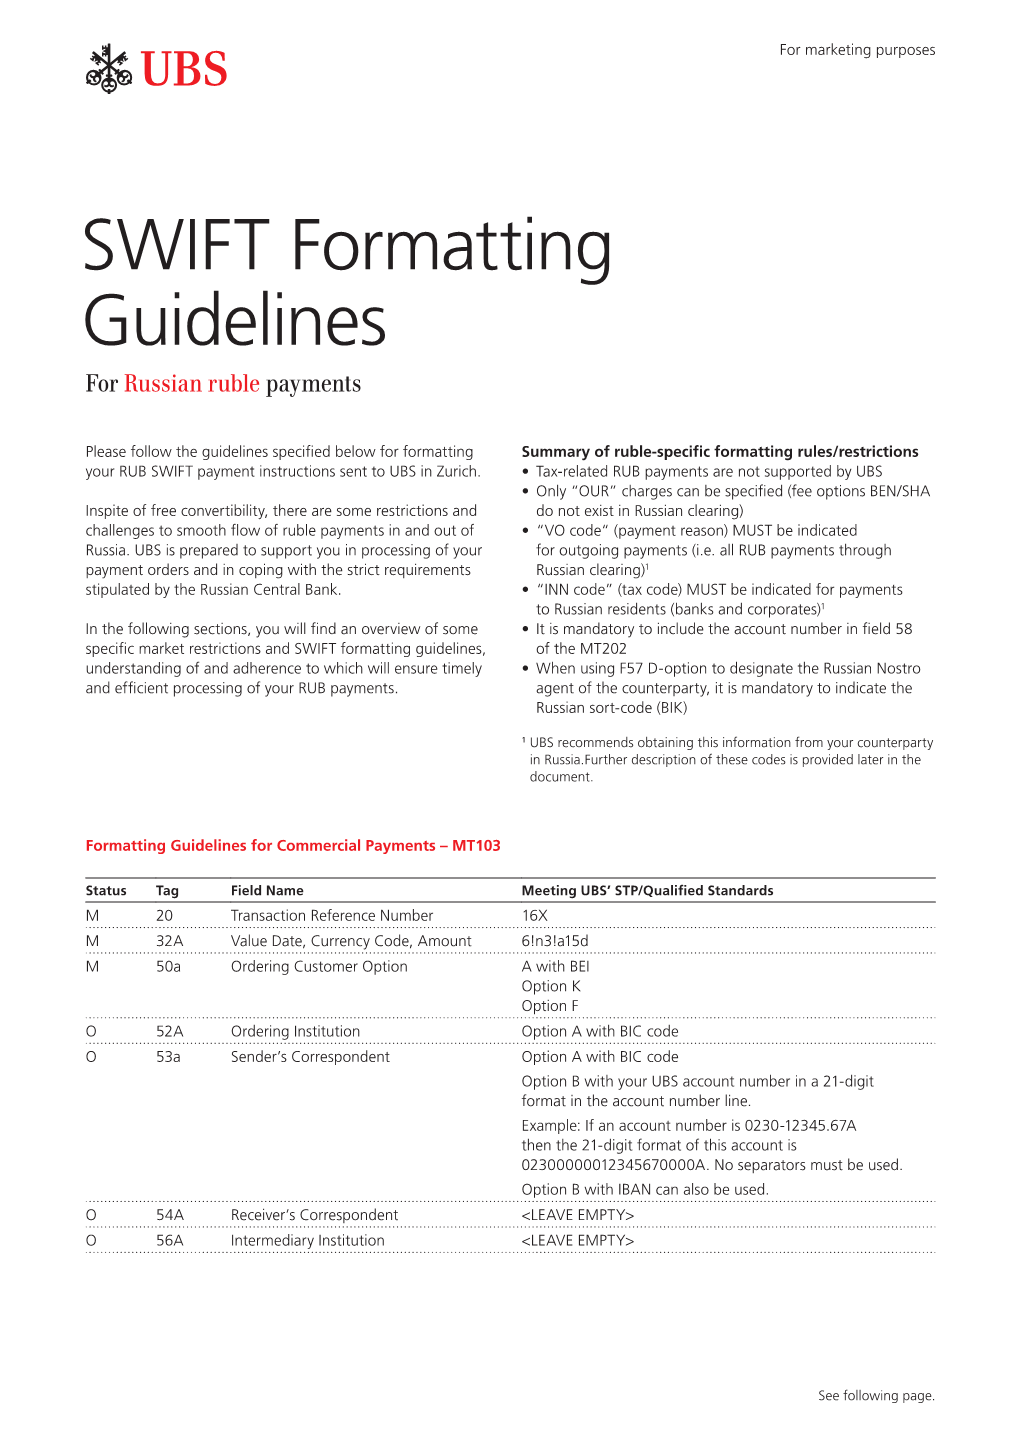 Swift Formatting Guidelines